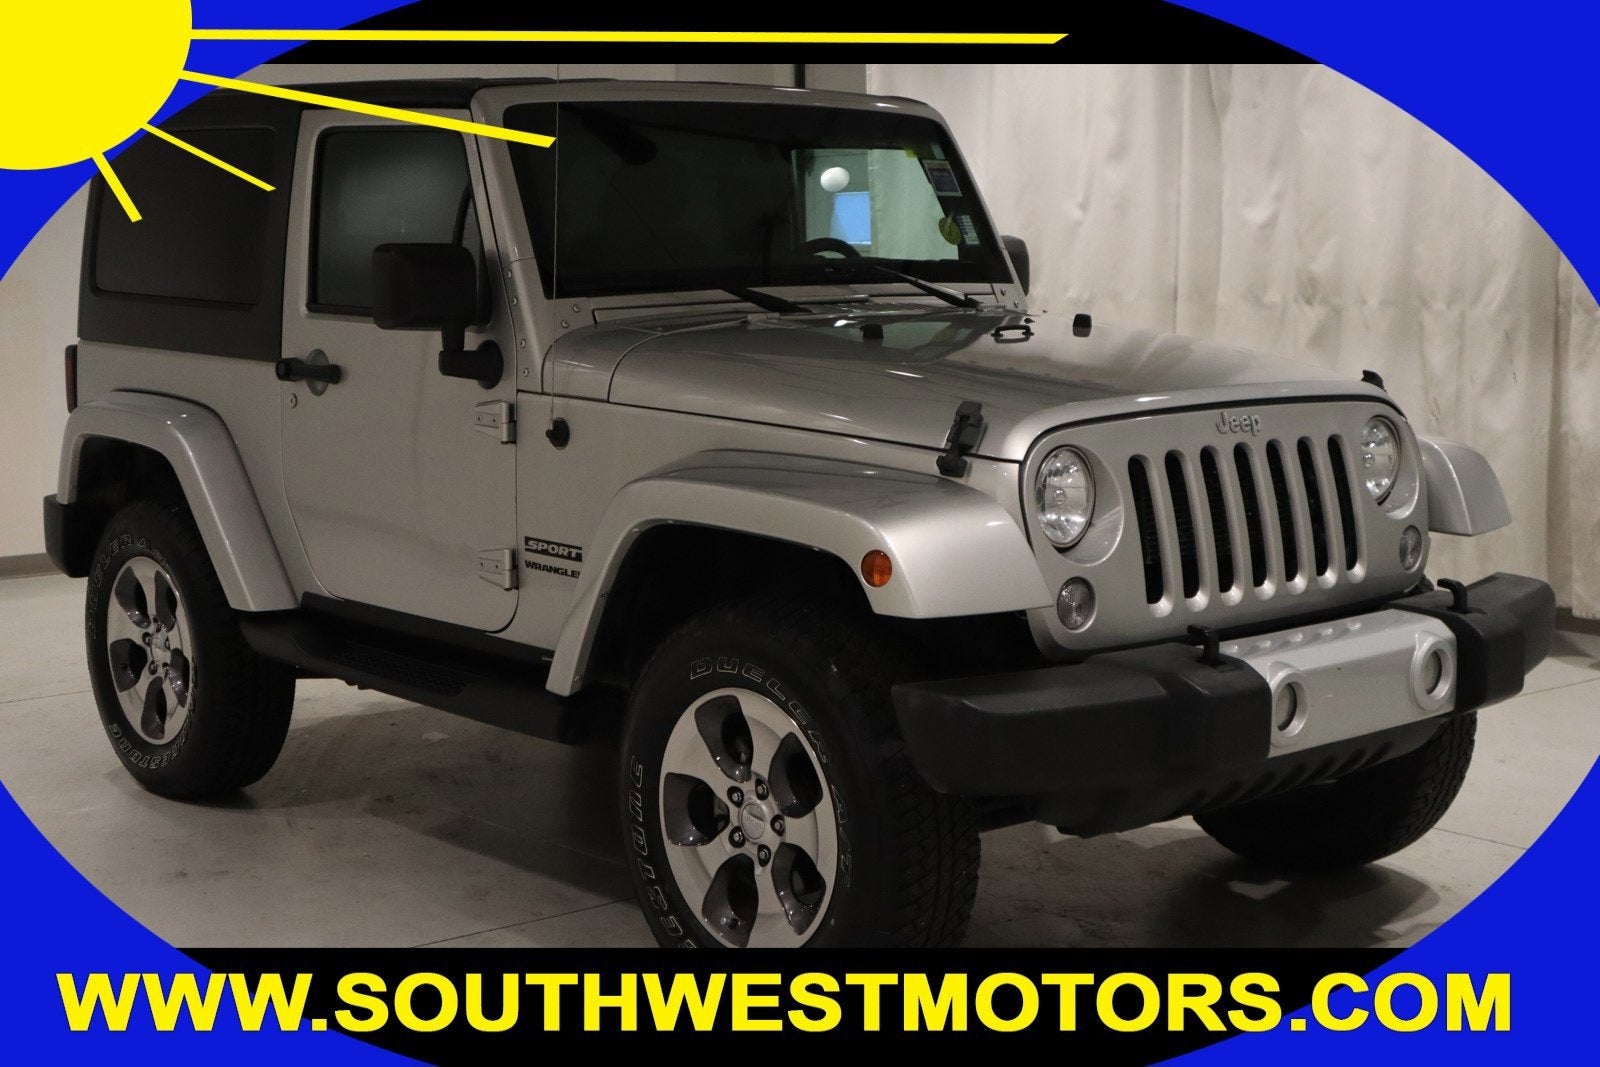 2018 Jeep Wrangler JK Sport | Southwest Motors Specials Pueblo, CO